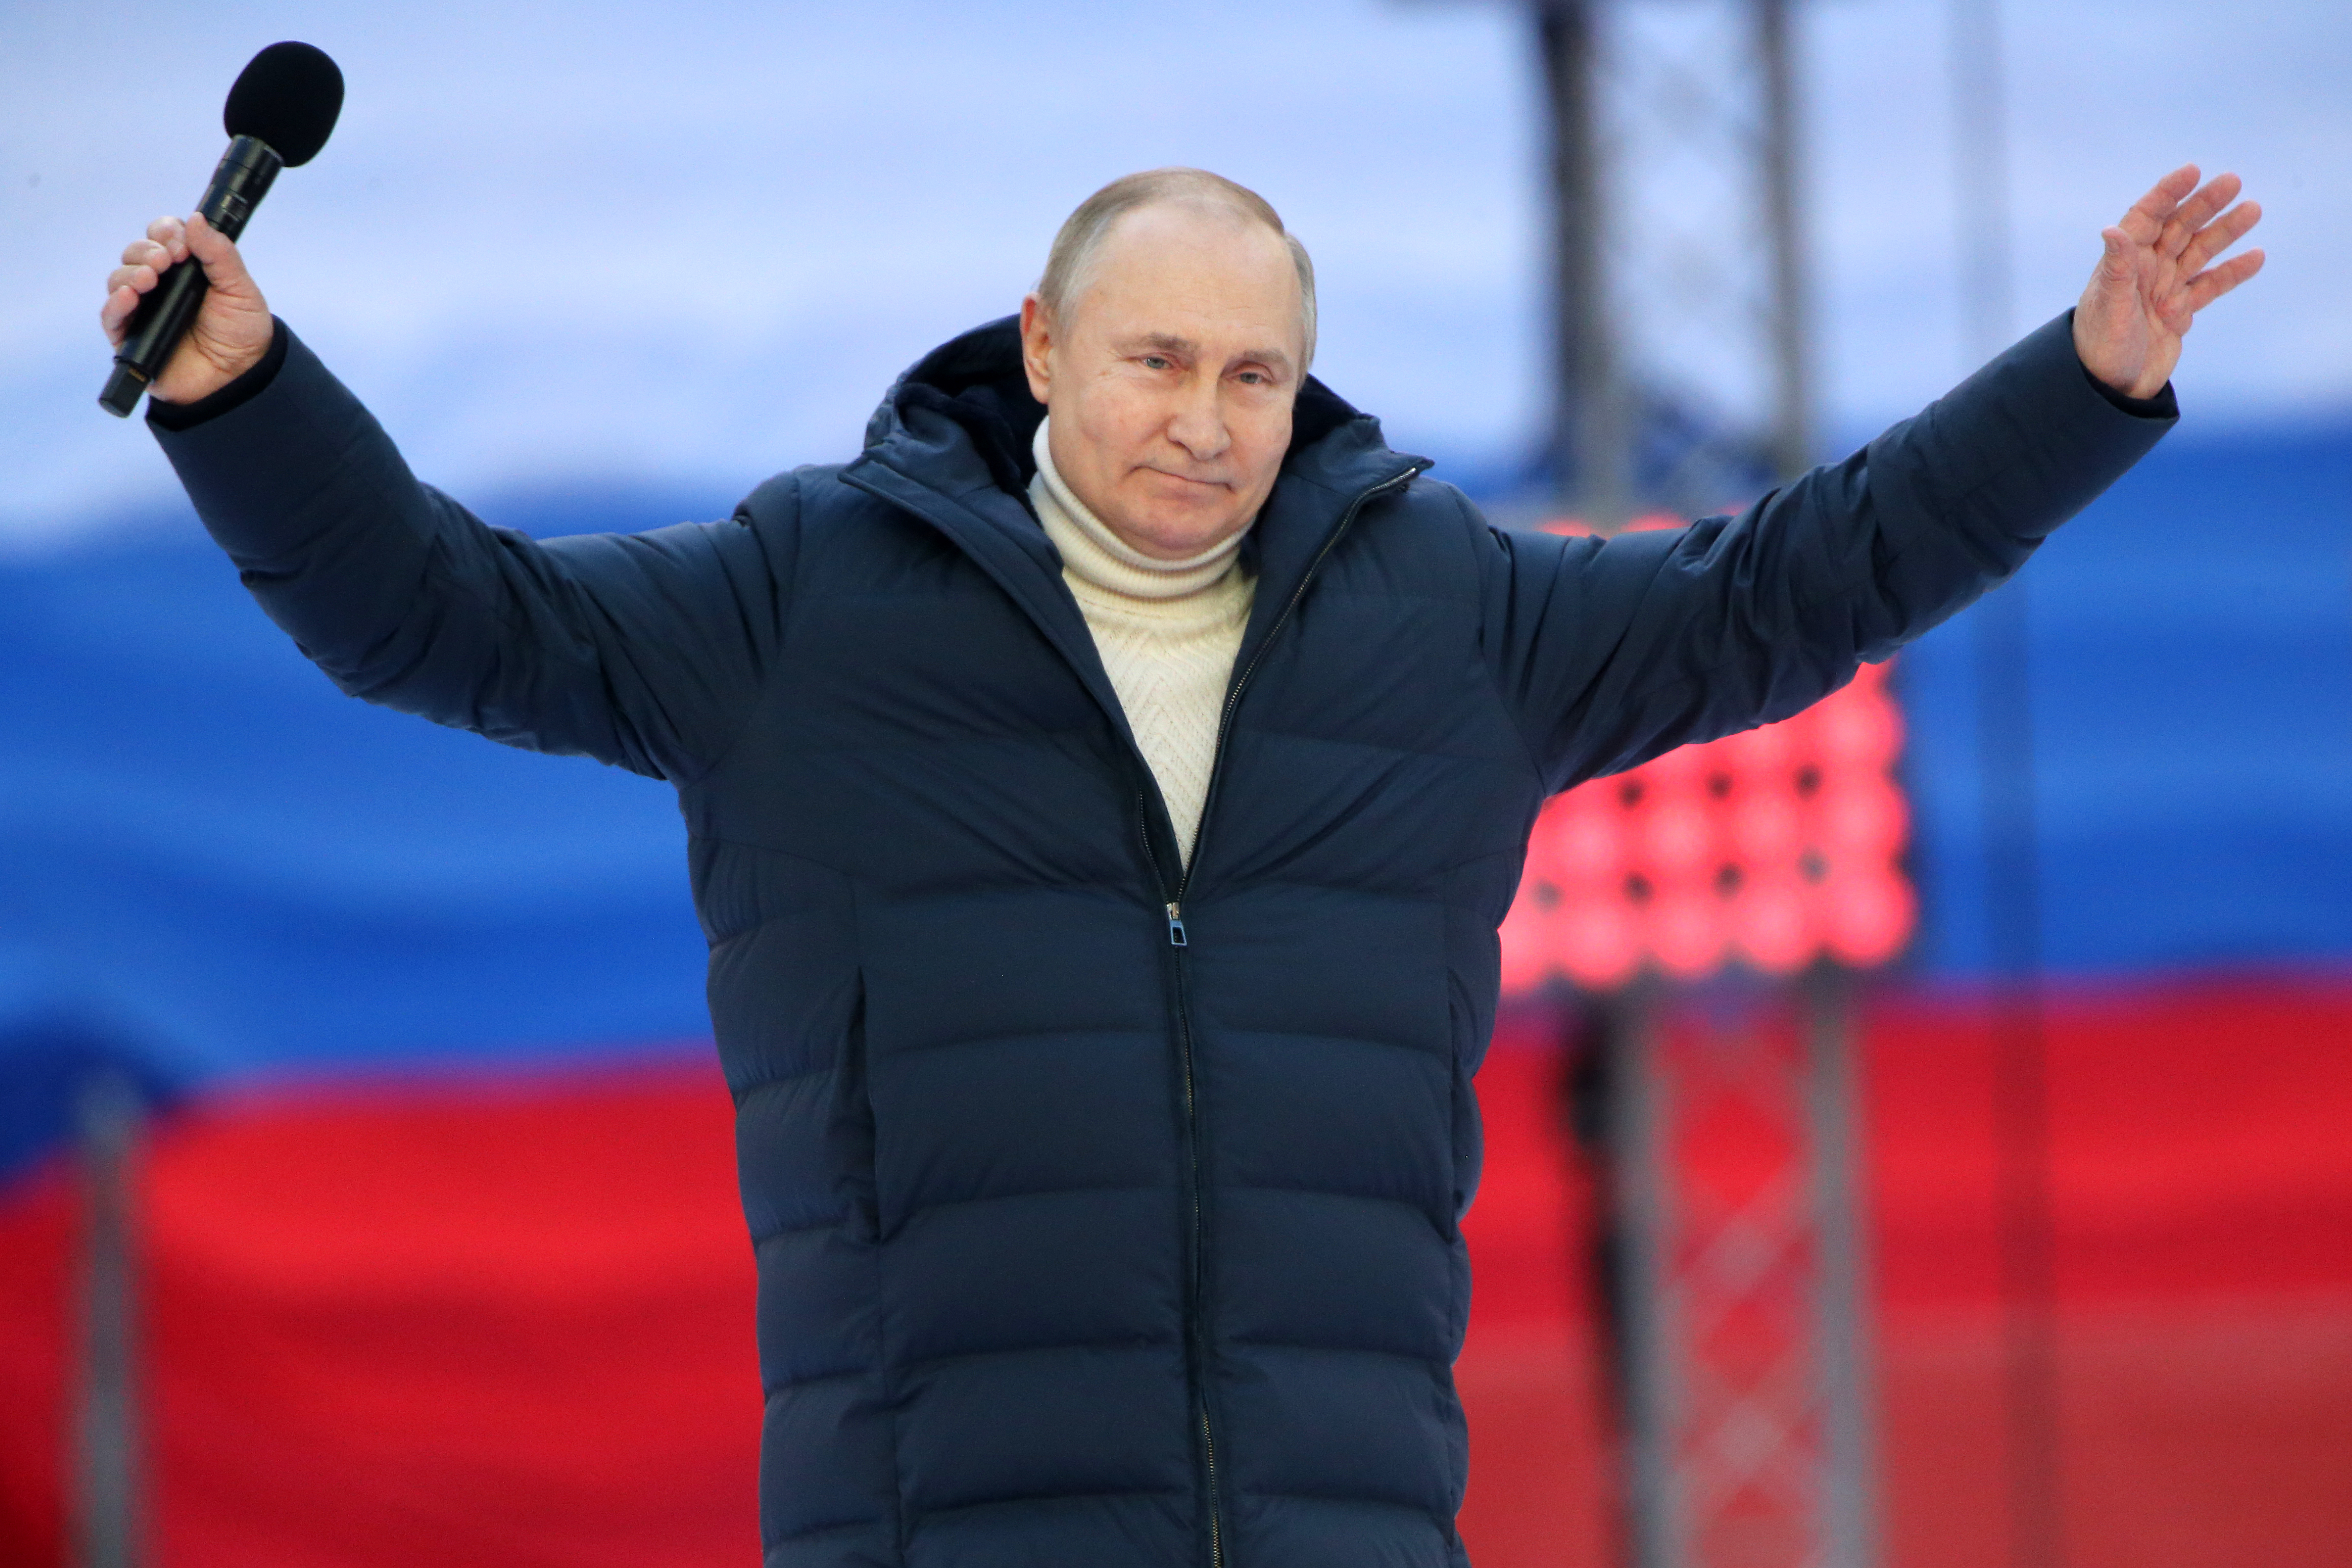 Intel: Putin may cite Ukraine war to meddle in U.S. politics